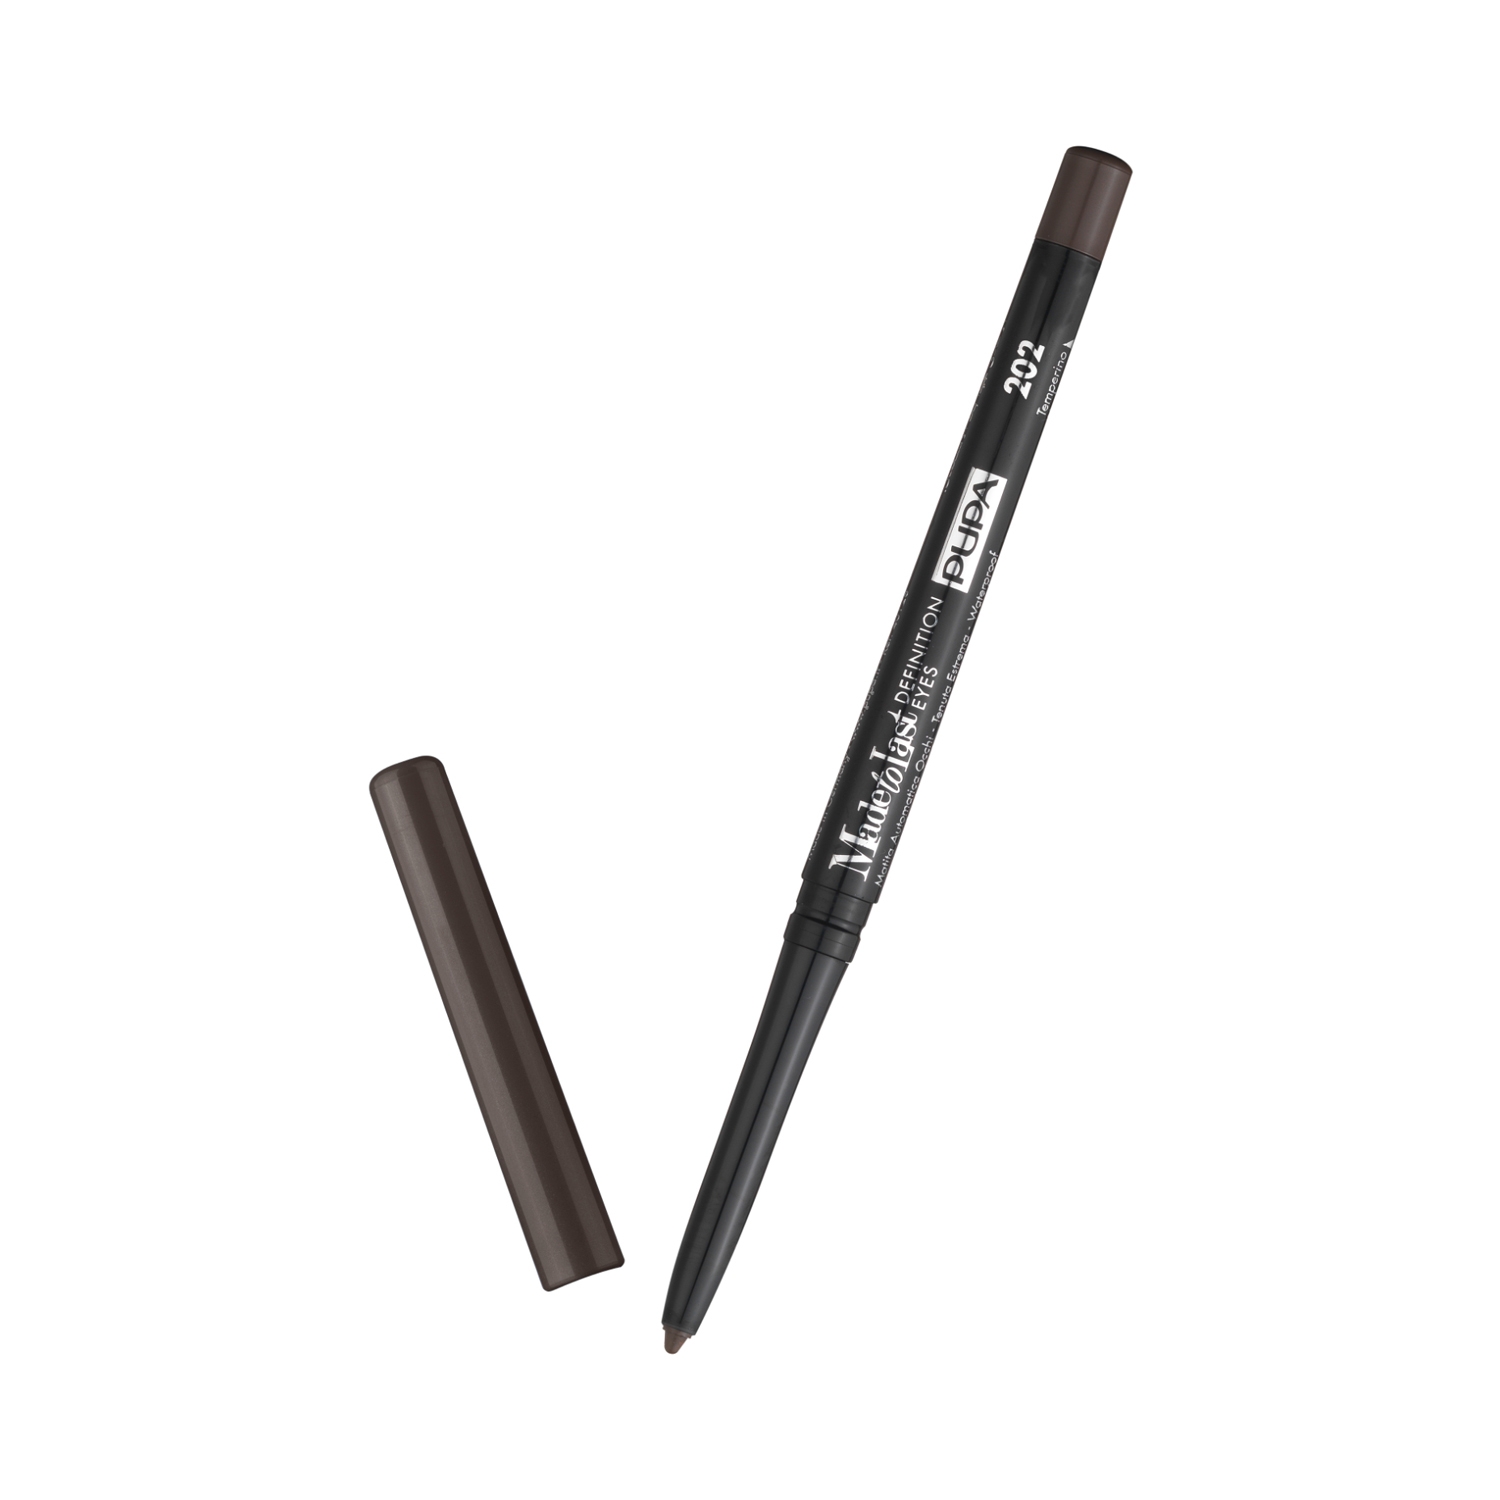 Pupa Milano Made To Last Definition Eye Pencil - 202 Dark Cocoa (0.35g)